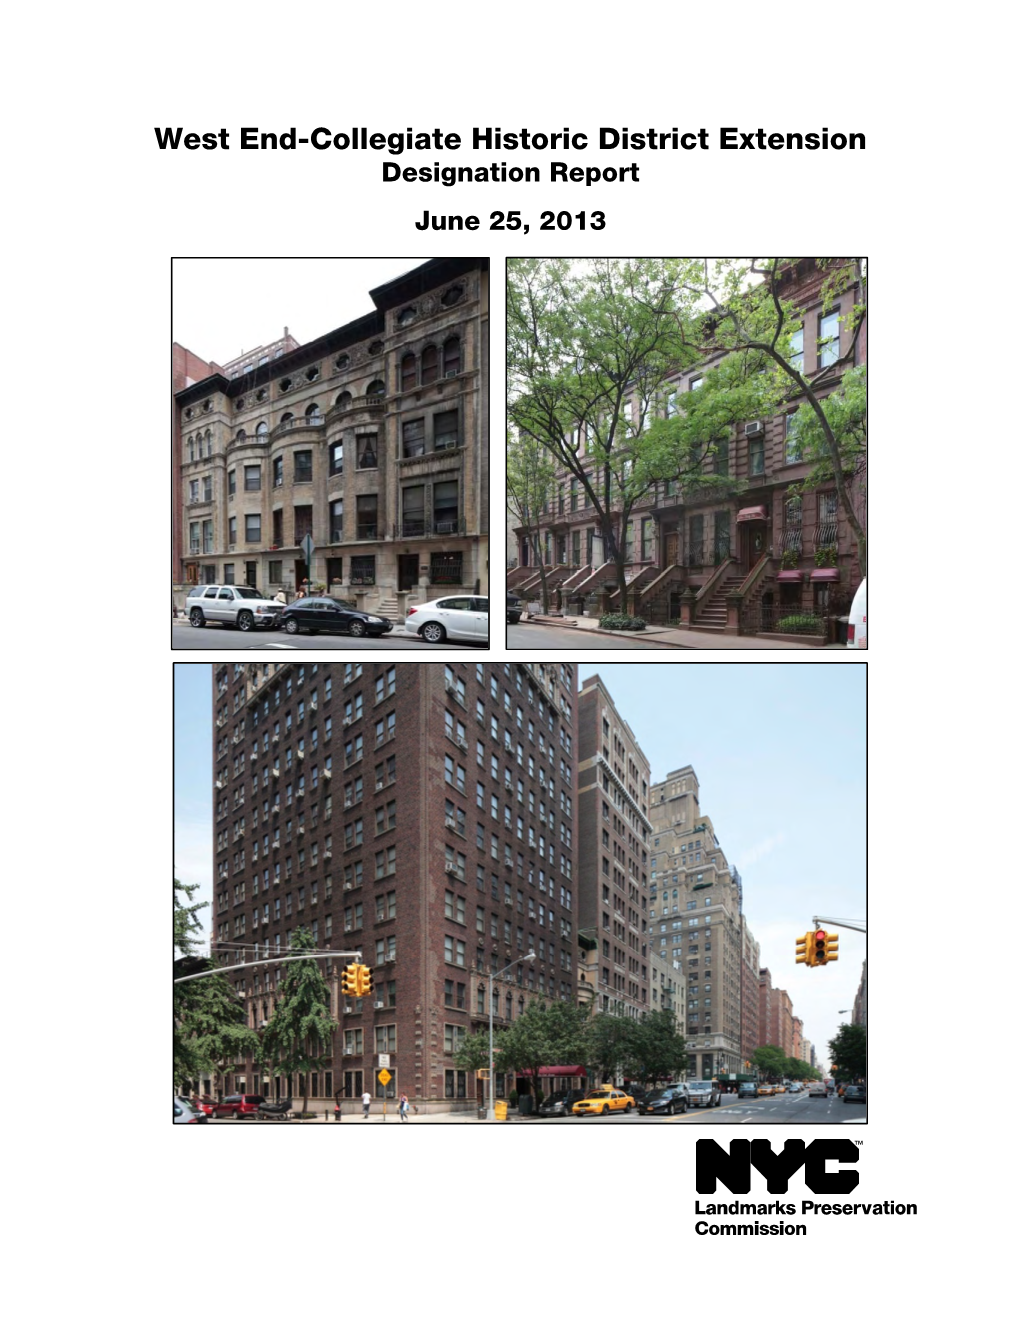 West End-Collegiate Historic District Extension Designation Report June 25, 2013